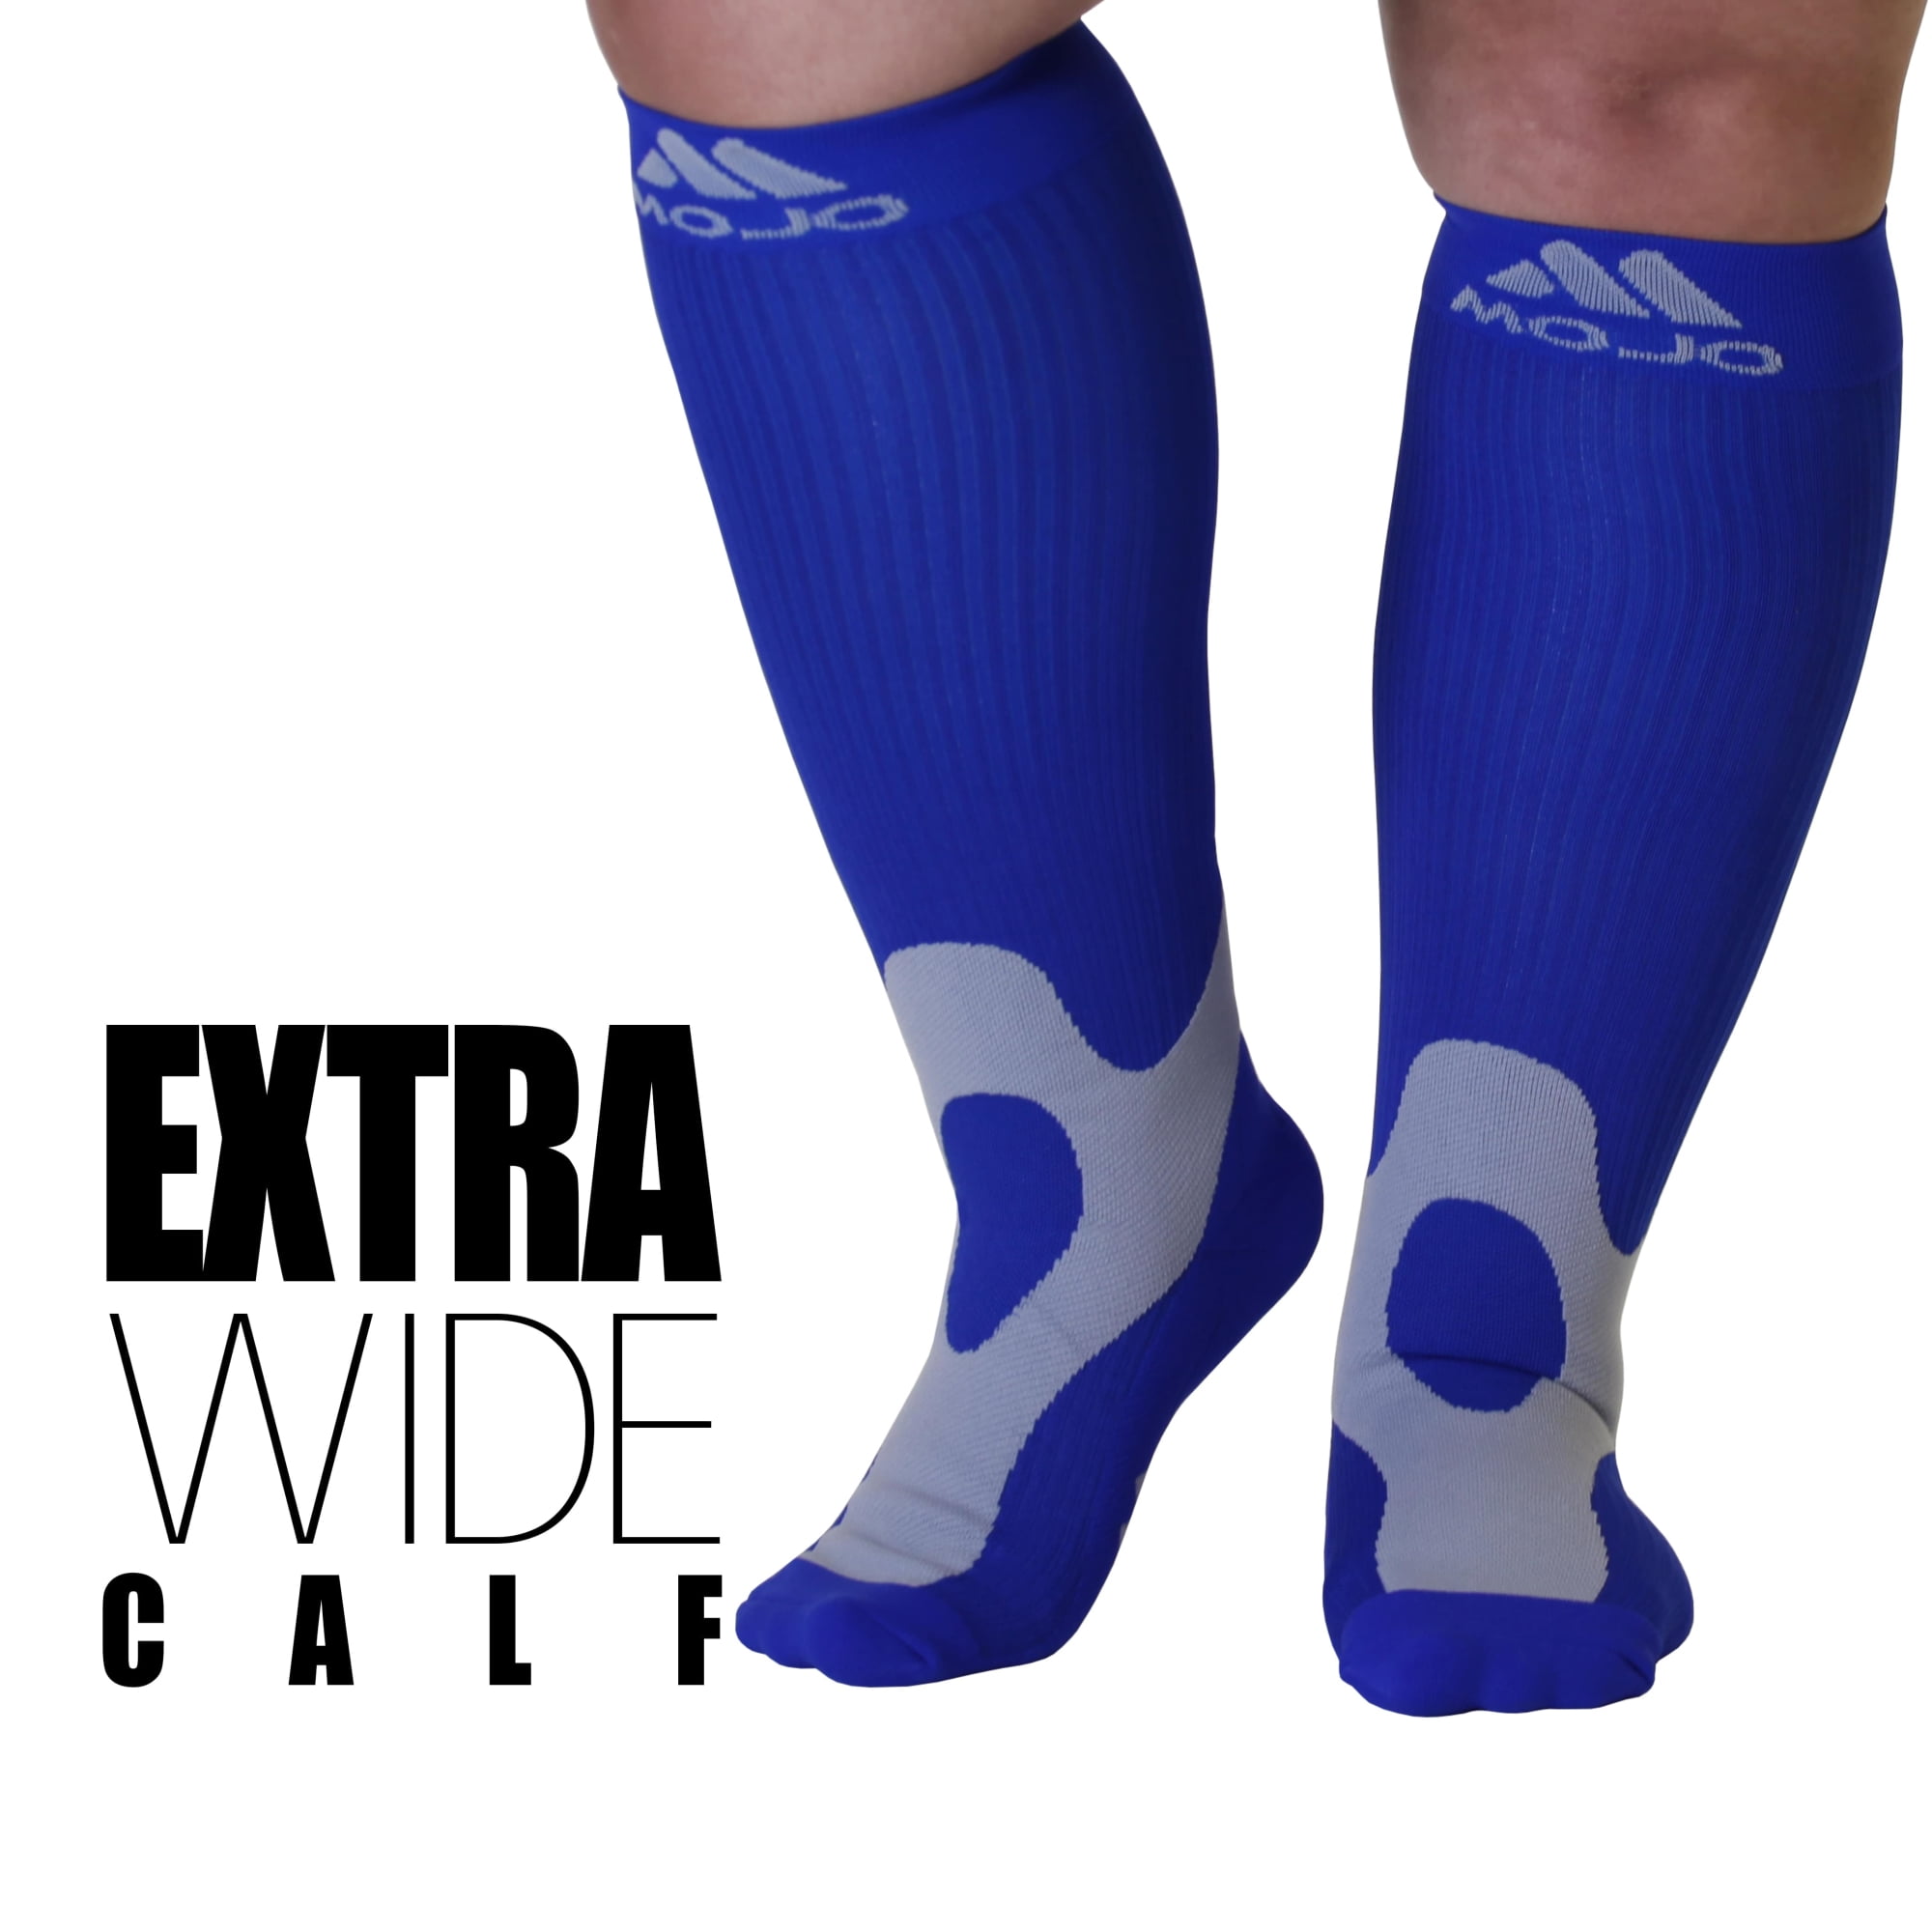 Mojo Coolmax Recovery & Performance Sports Compression Socks Unisex Triathlete Compression Socks